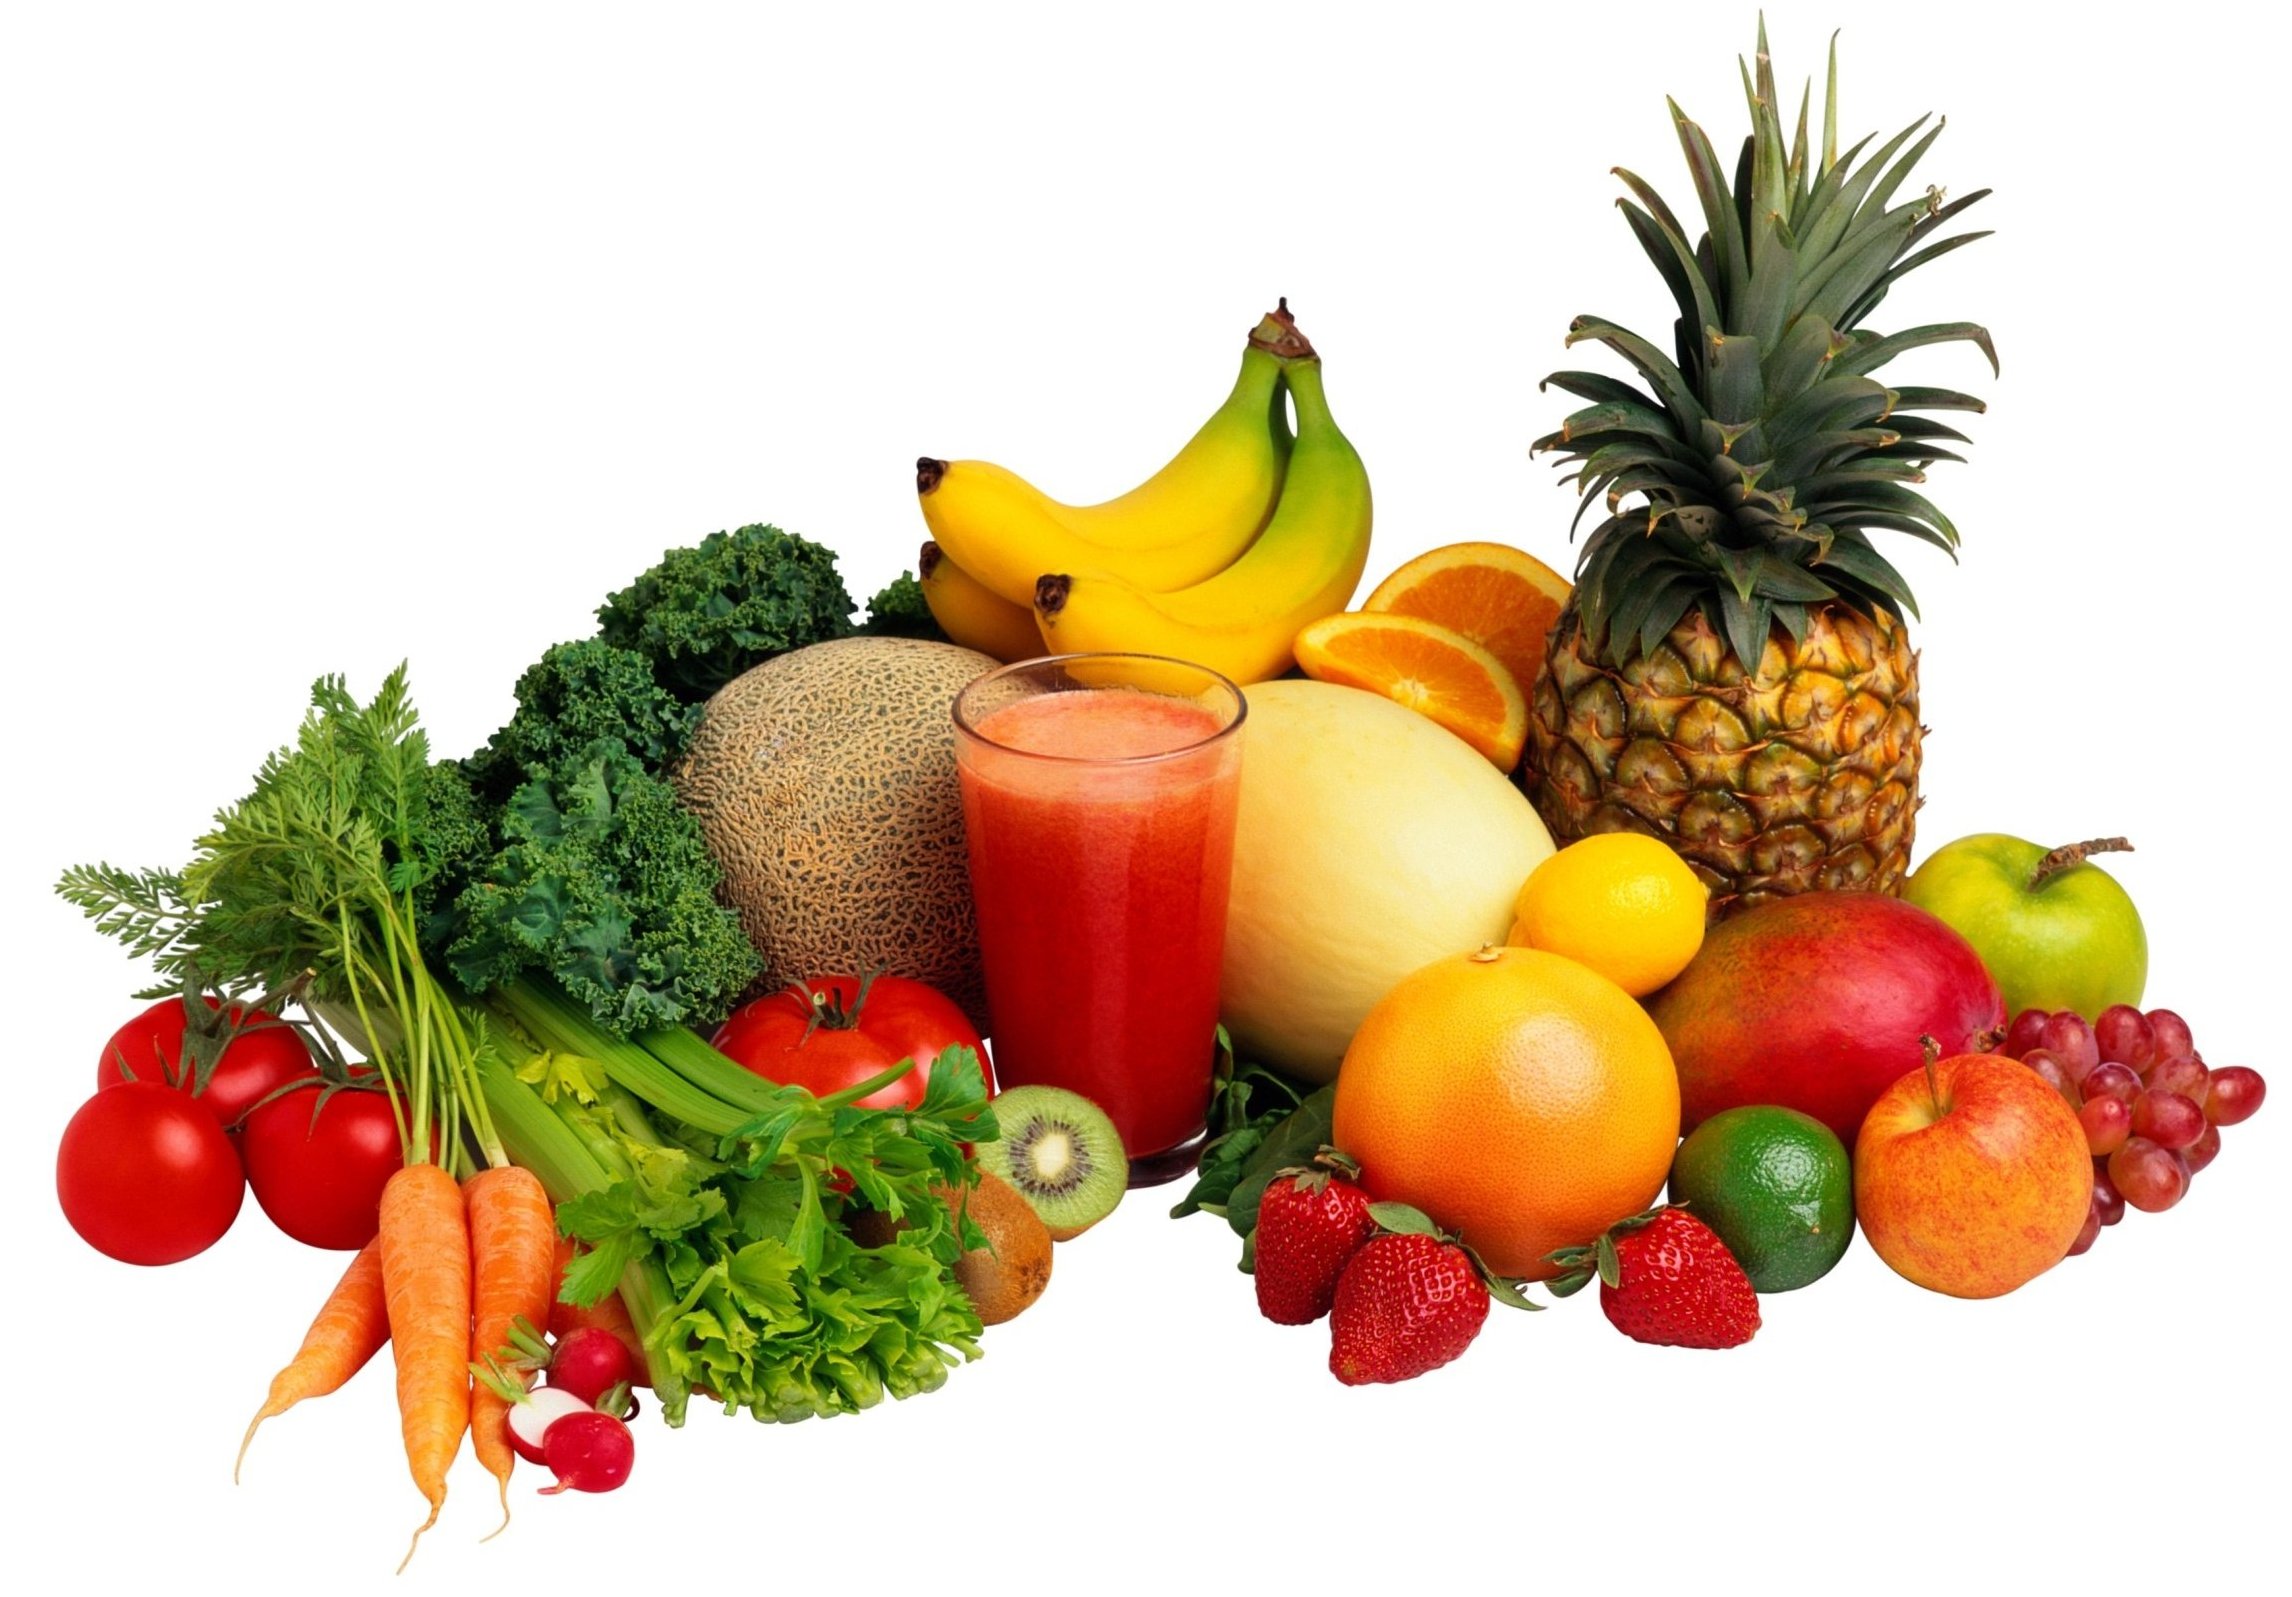 Healthy Eating Foods Google image from http://jennyturner725.files.wordpress.com/2013/05/food-healthy-eating.jpg